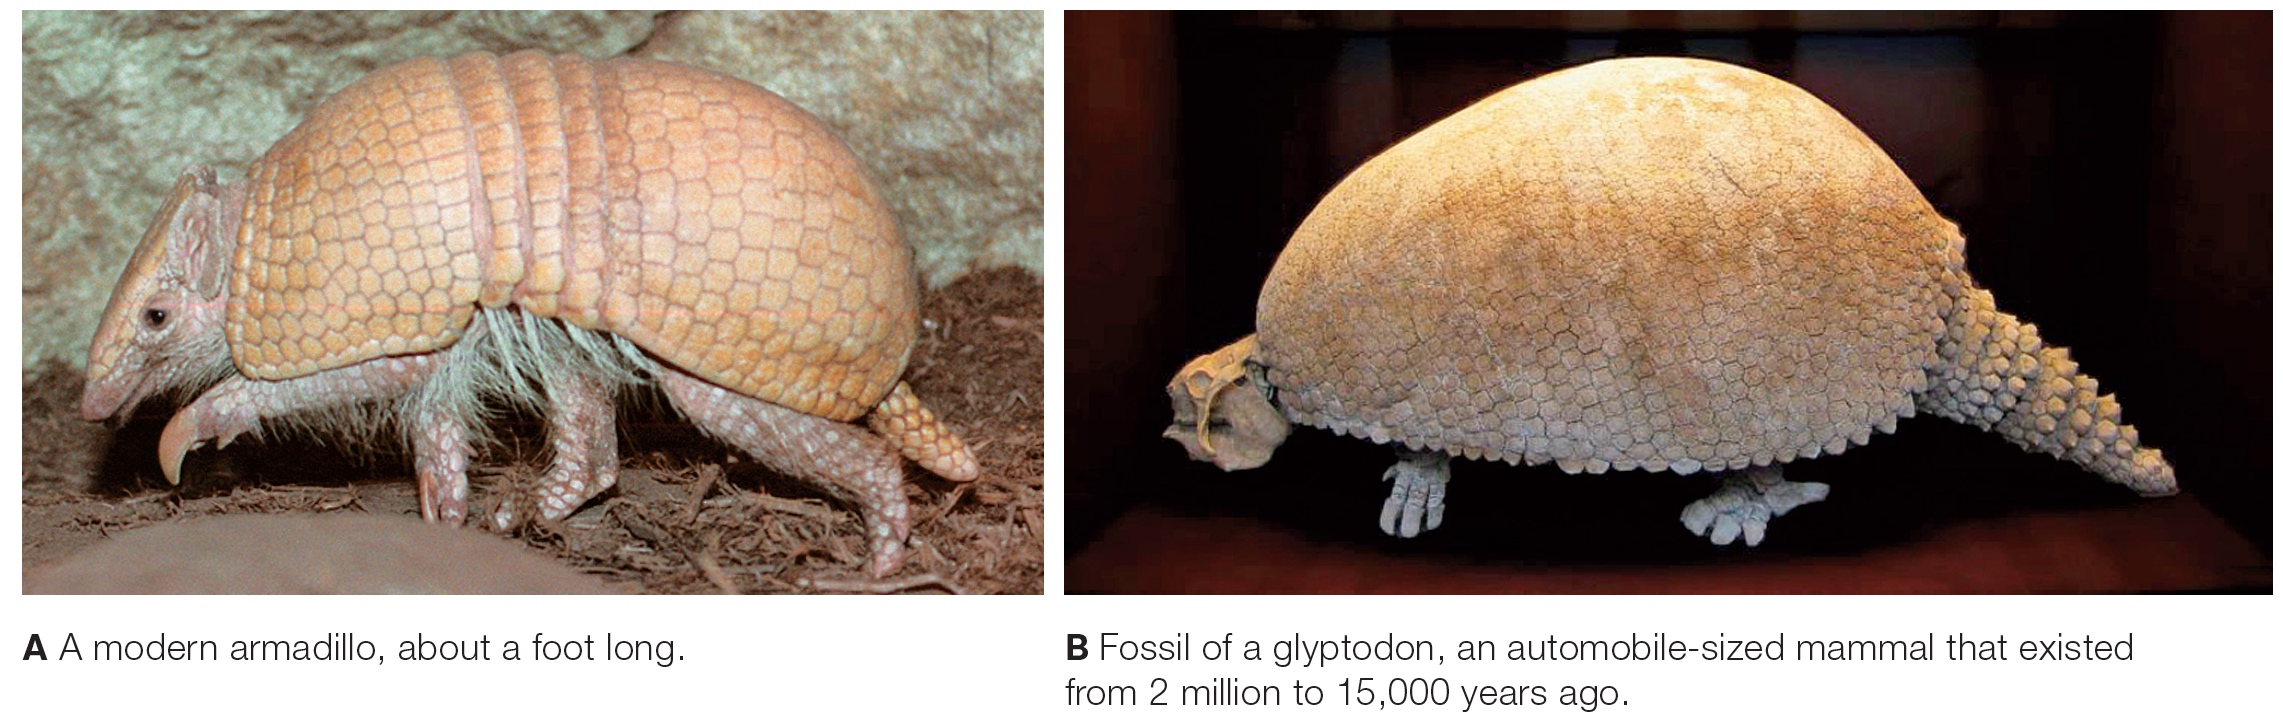 Modern Armadillo versus a Fossil Glyptodon